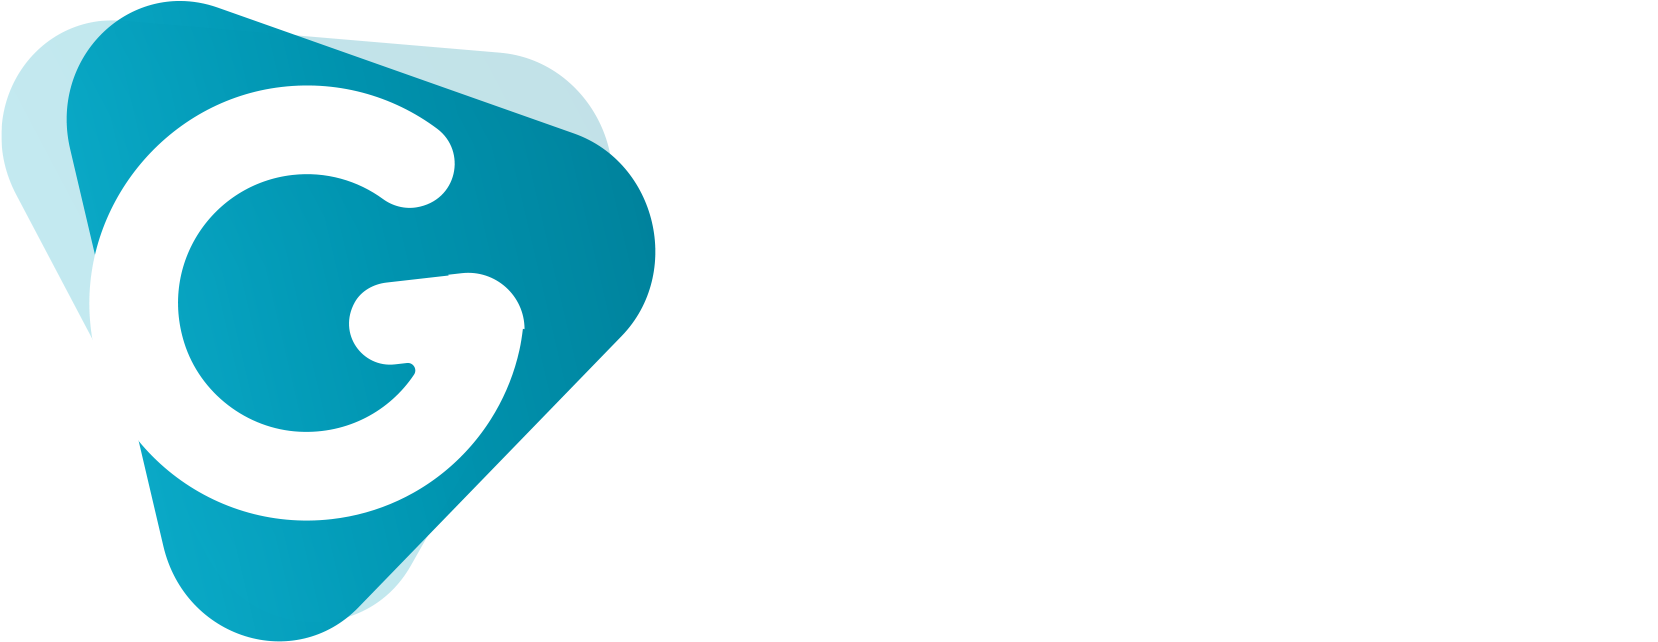 Television (1702x687)